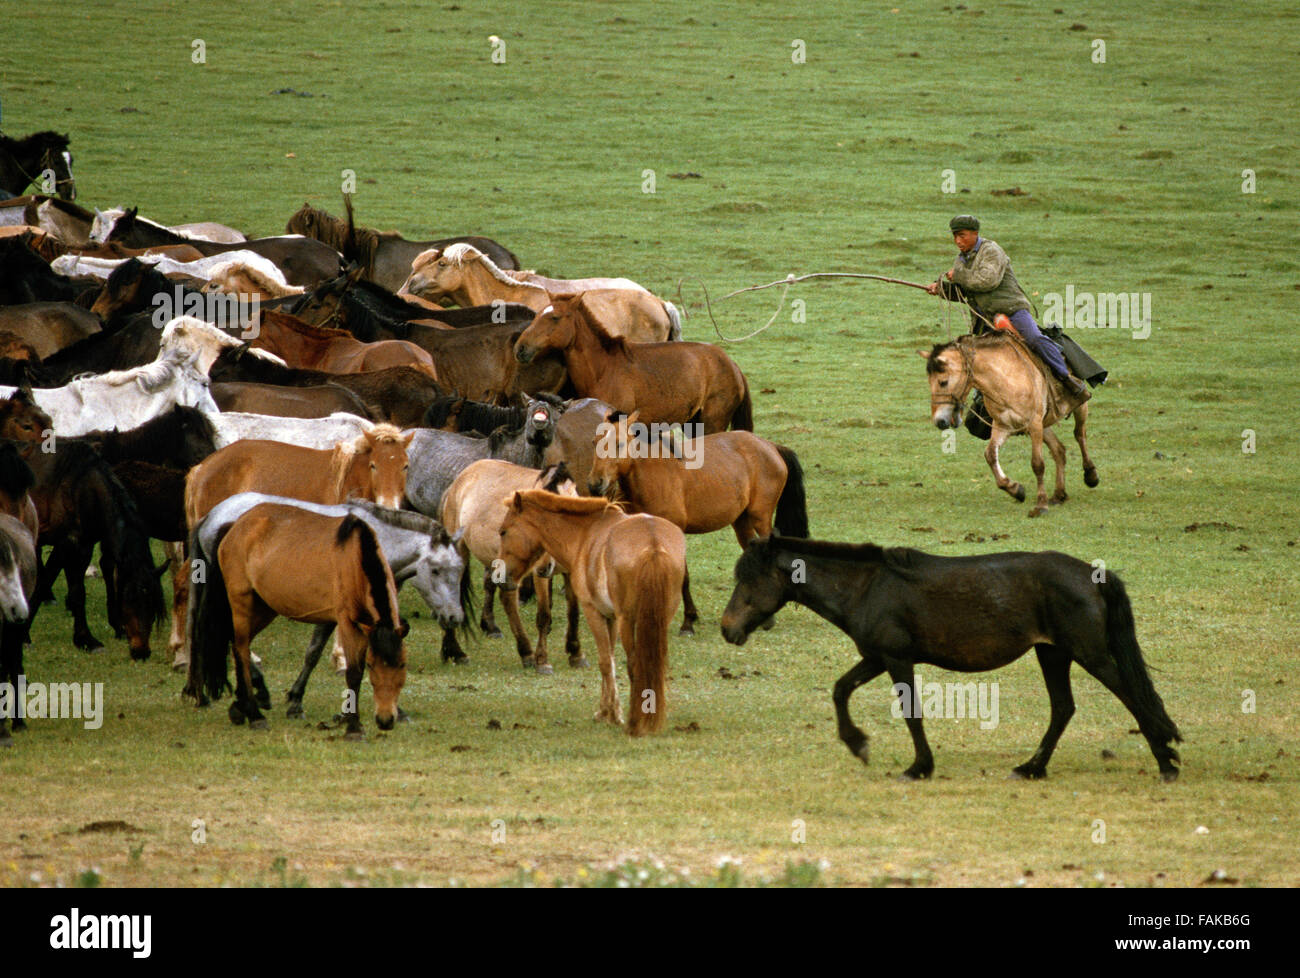 Inner Mongolia grasslands horse cowboys, Autonomous region of North China Stock Photo